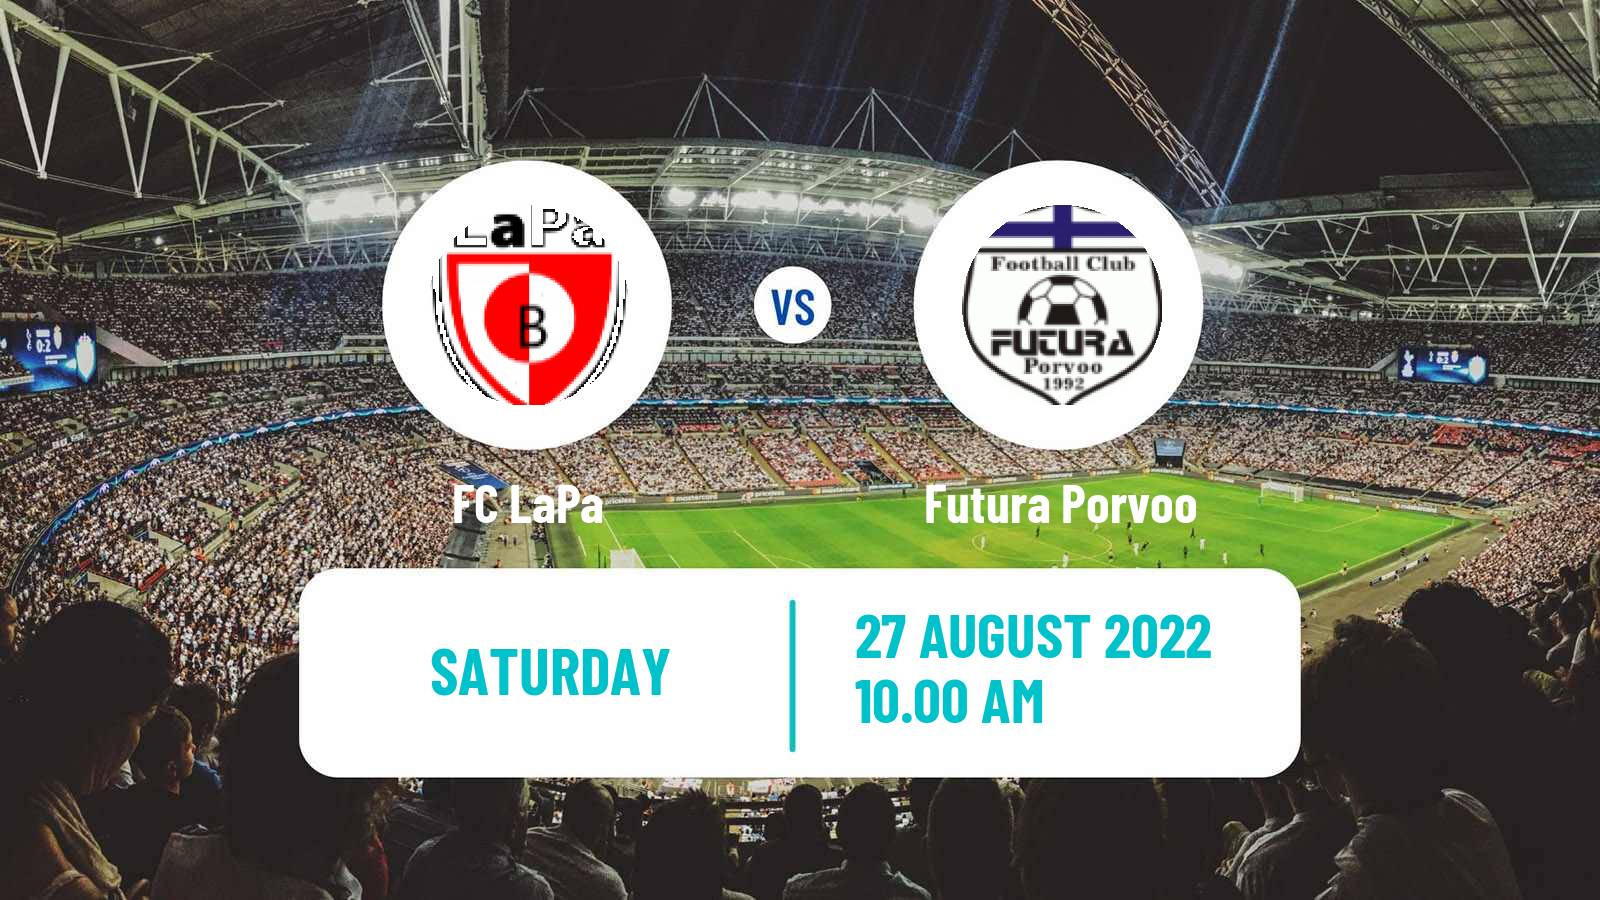 Soccer Finnish Kakkonen Group A LaPa - Futura Porvoo